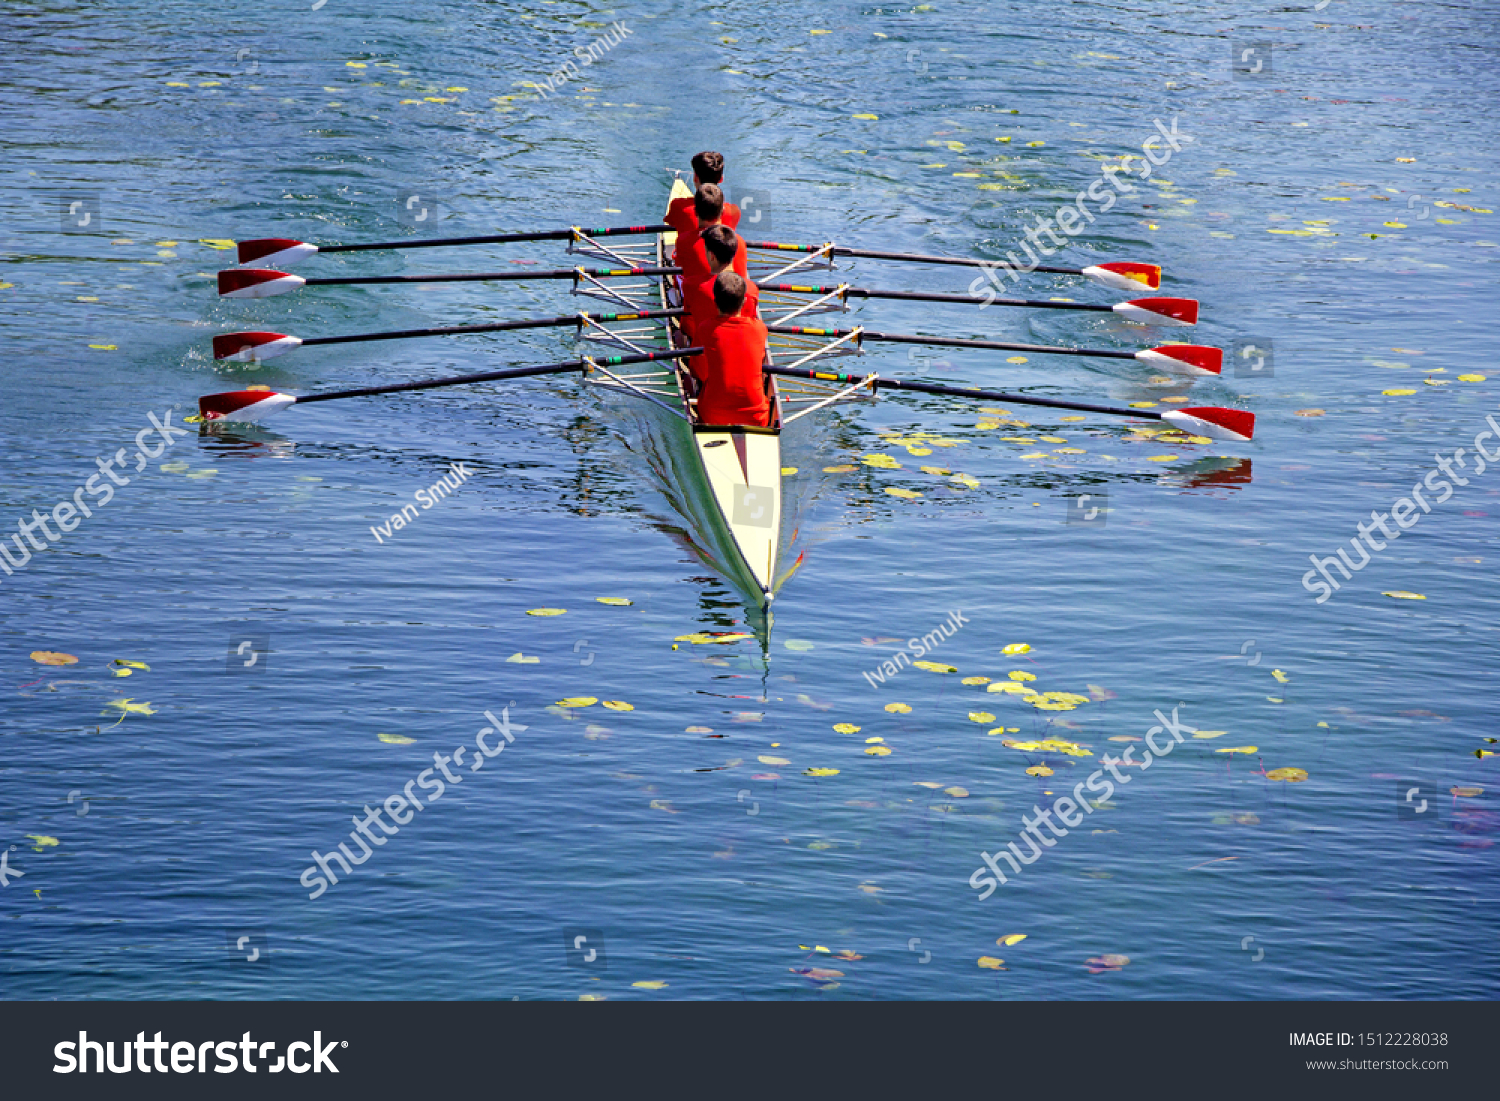 Men's quadruple rowing team on blue water, top view #1512228038